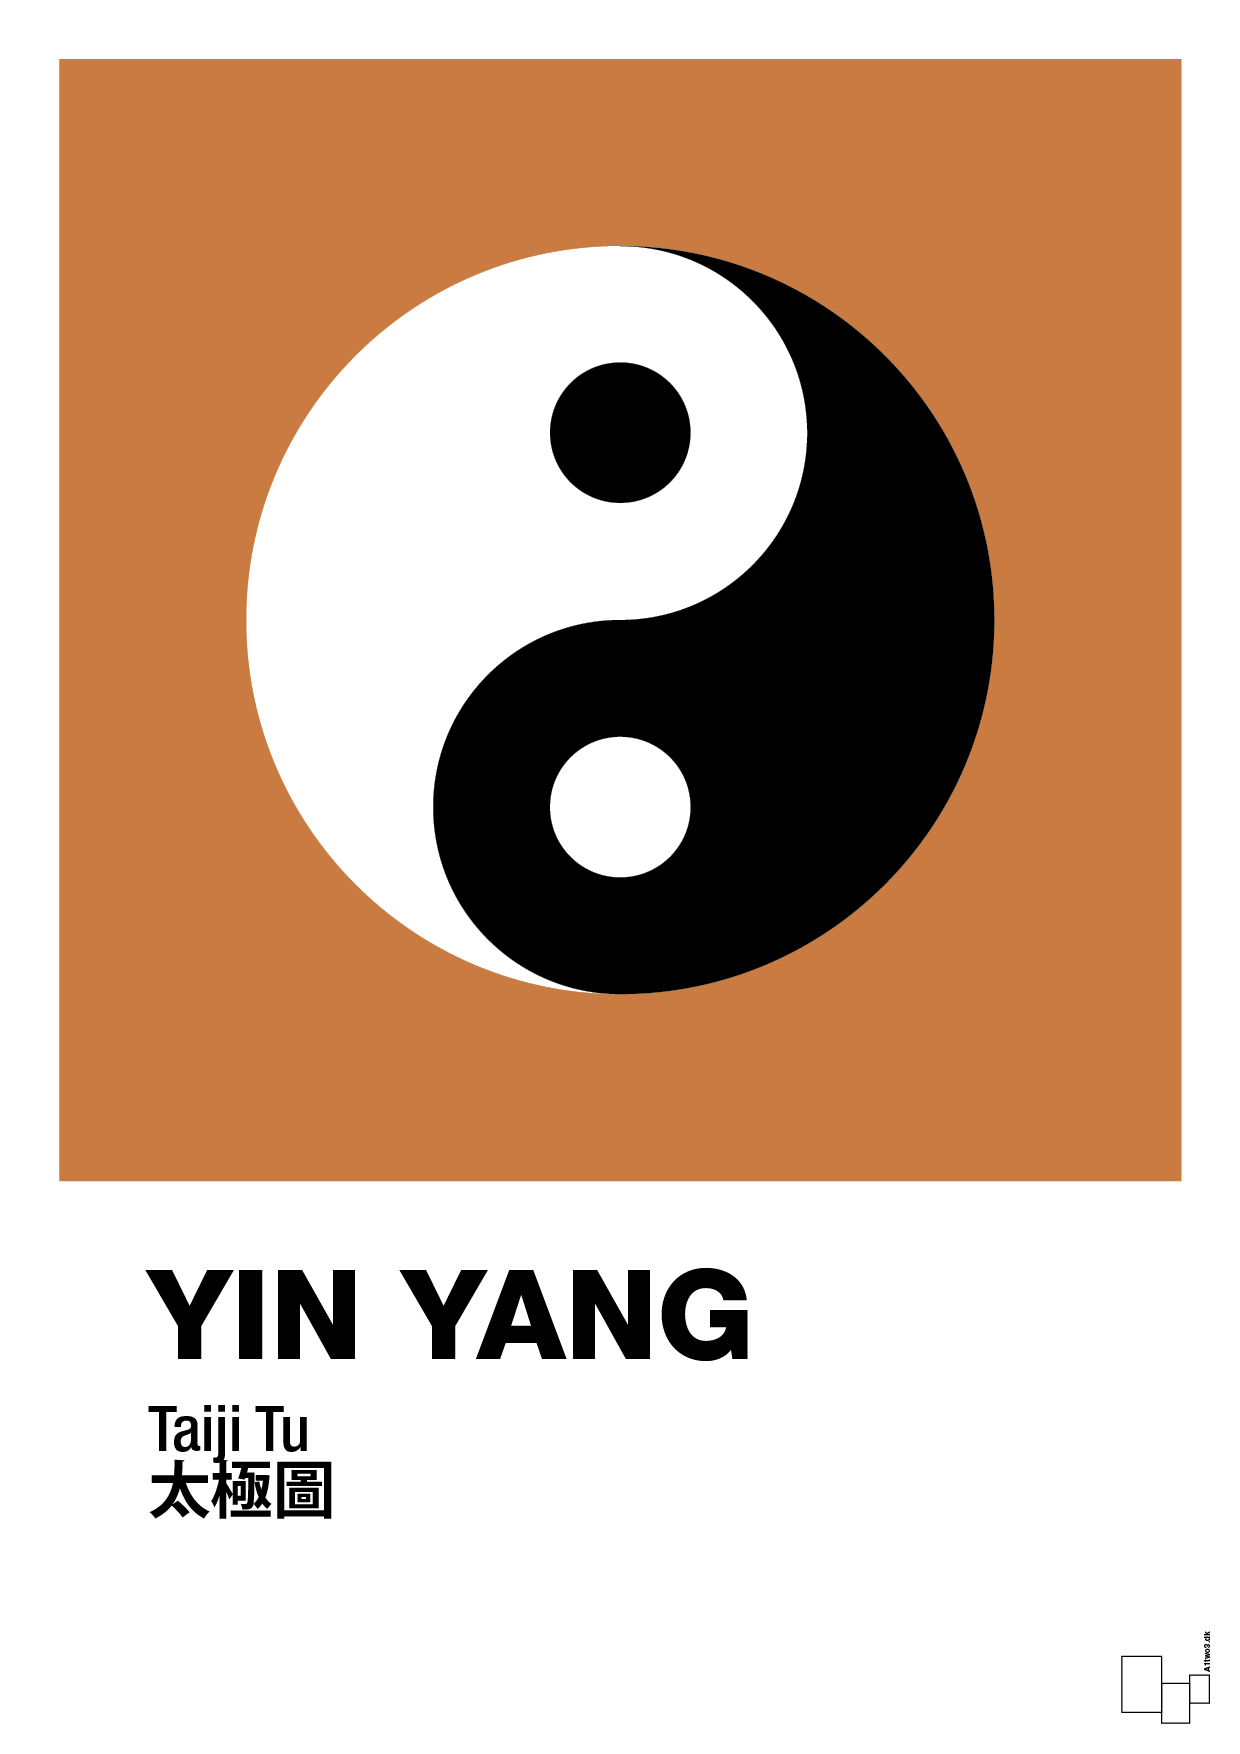 yin yang - Plakat med Videnskab i Rumba Orange